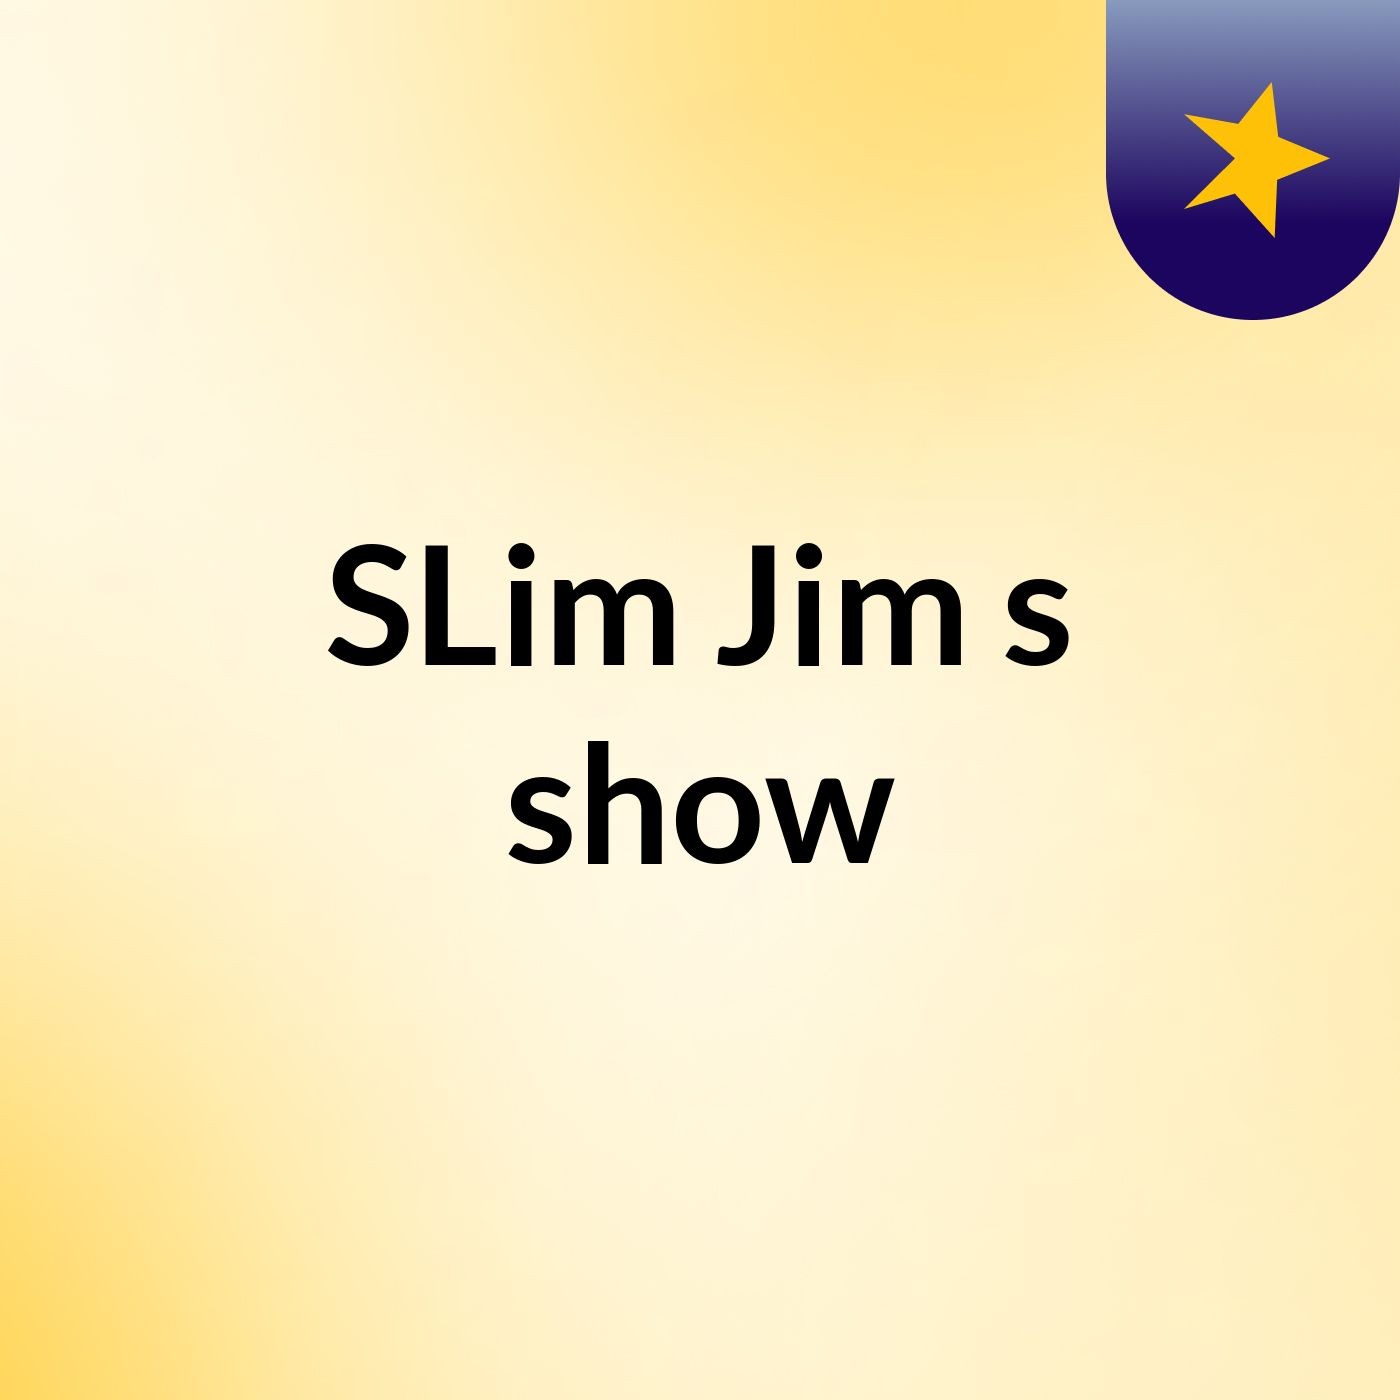 SLim Jim's show